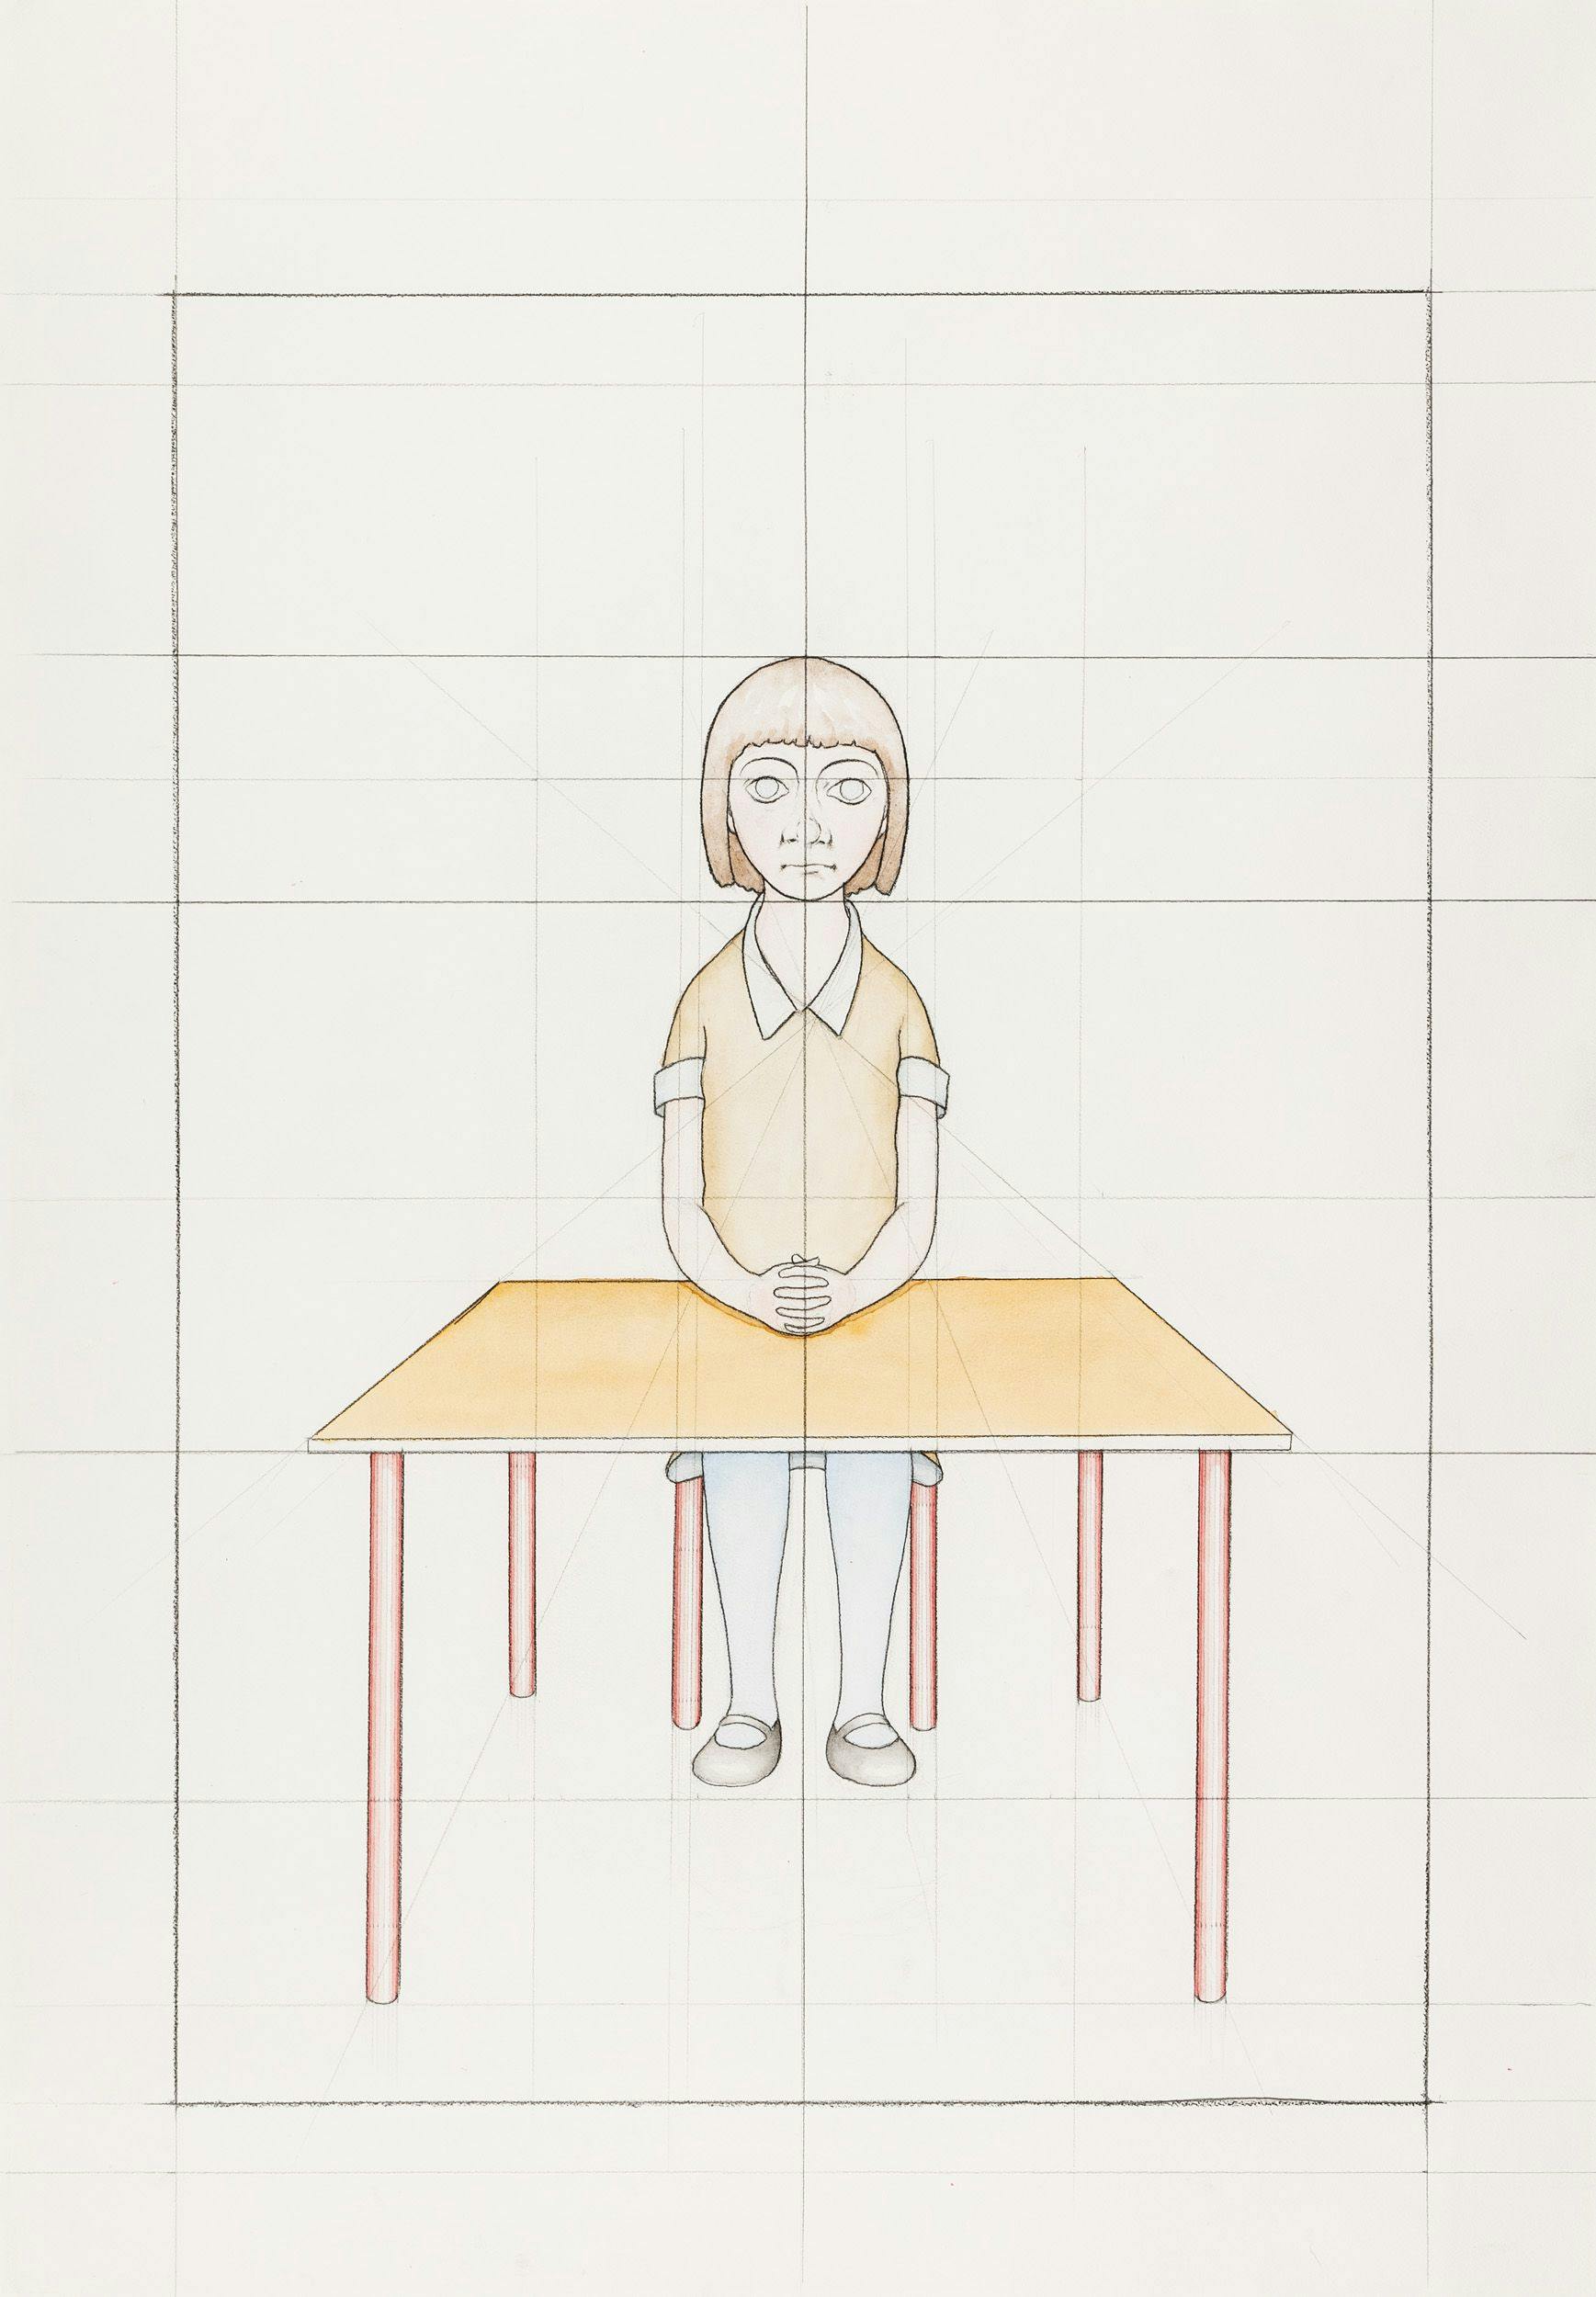 Konstverk: Peter Land, An Attempt to Reconstruct my Primary School Class from Memory (06) work in progress, 2012